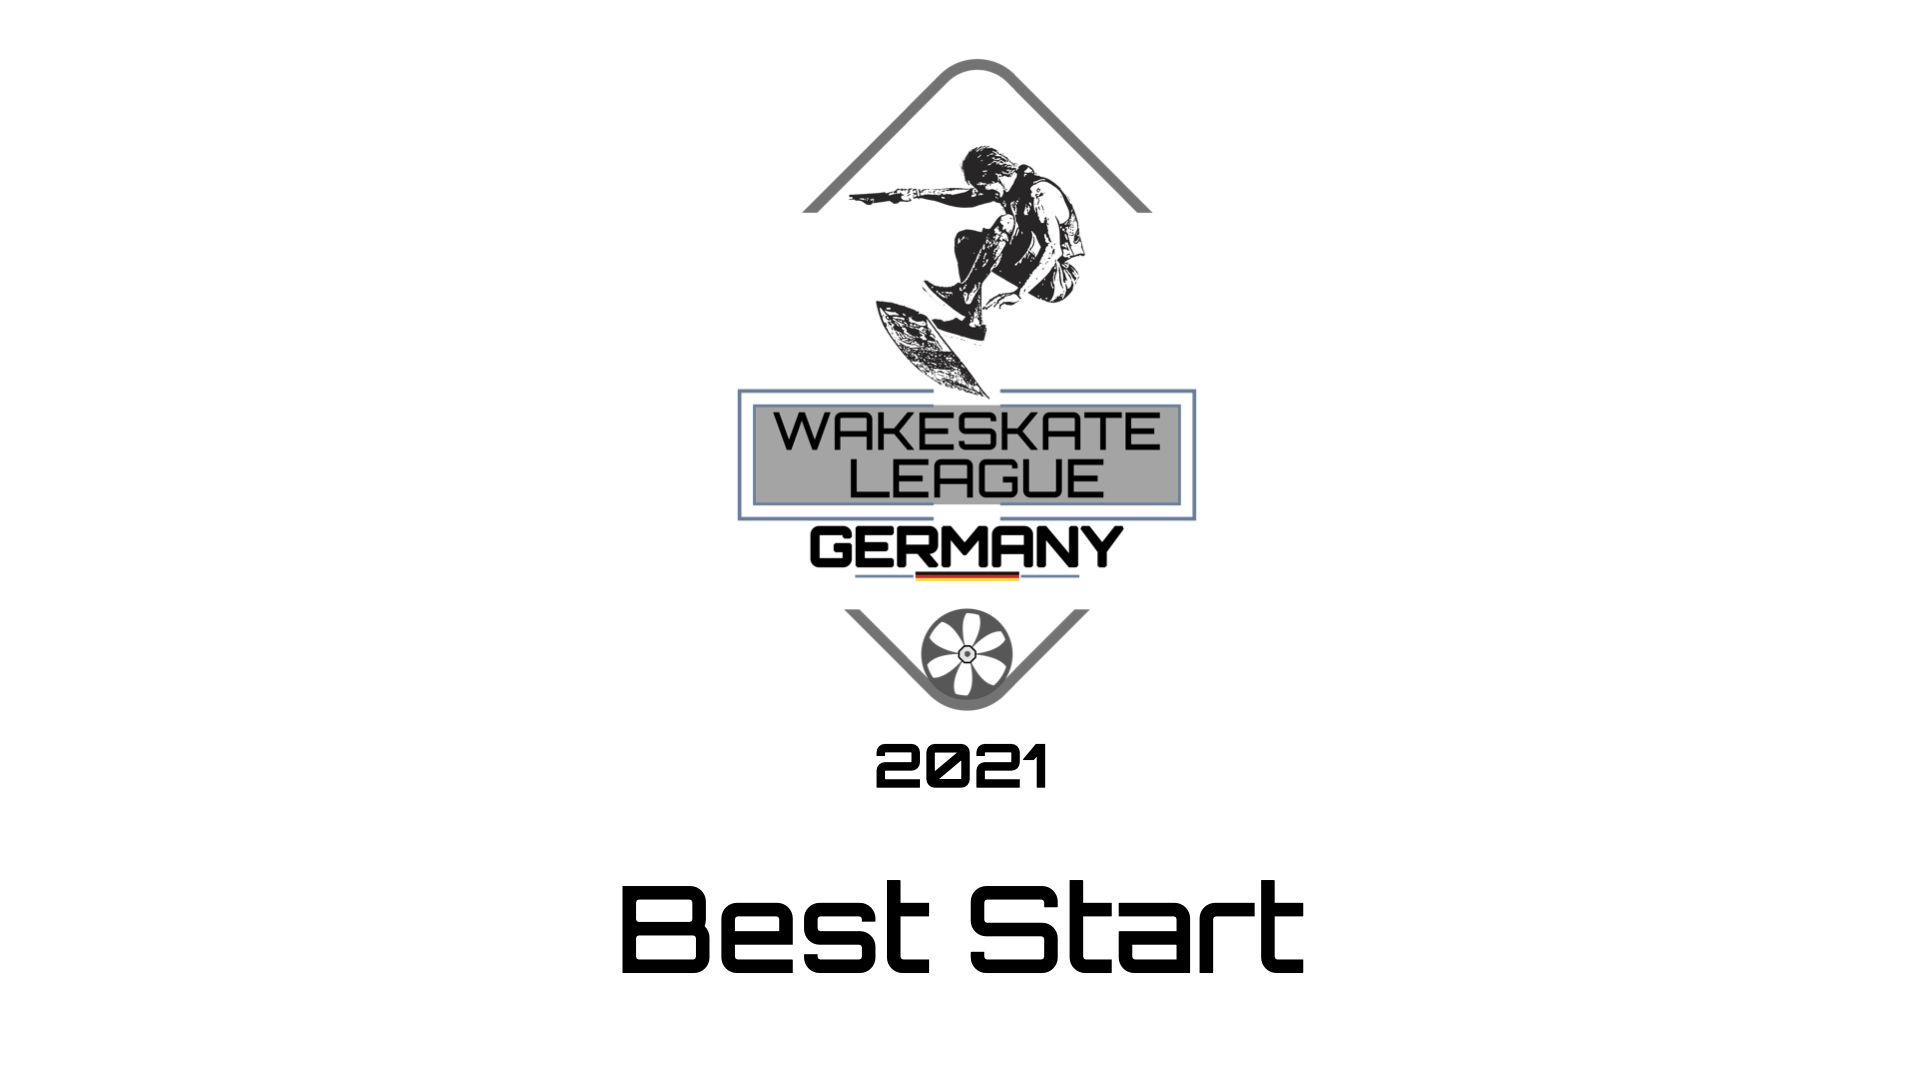 Wakeskate League Germany 2021 - #1 Best Start